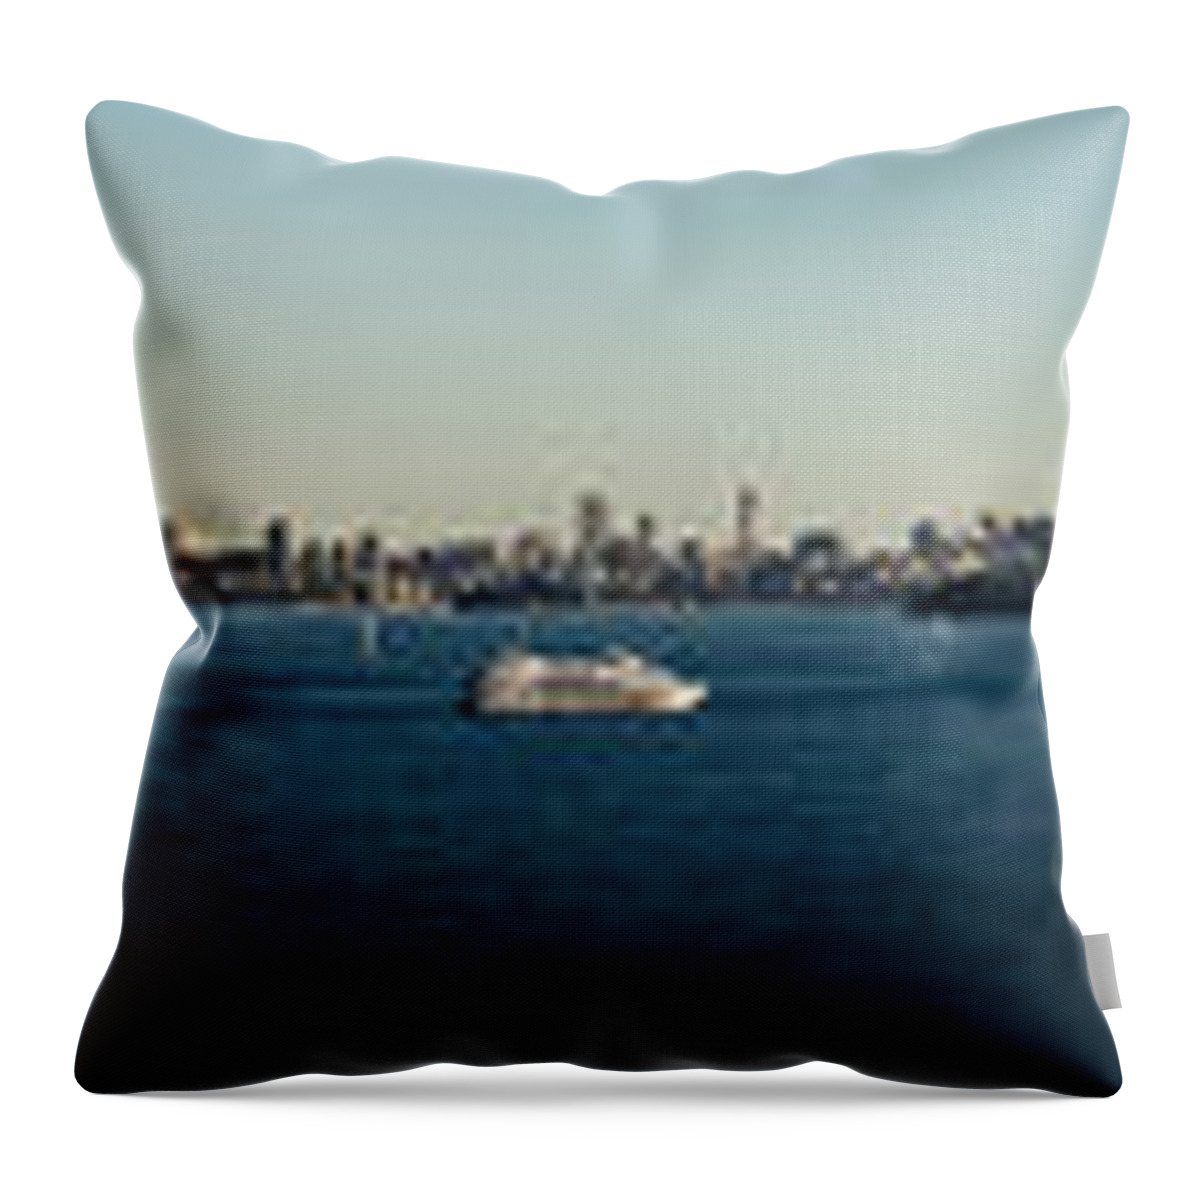 Sydney Throw Pillow featuring the photograph Sydney panorama by Miroslava Jurcik